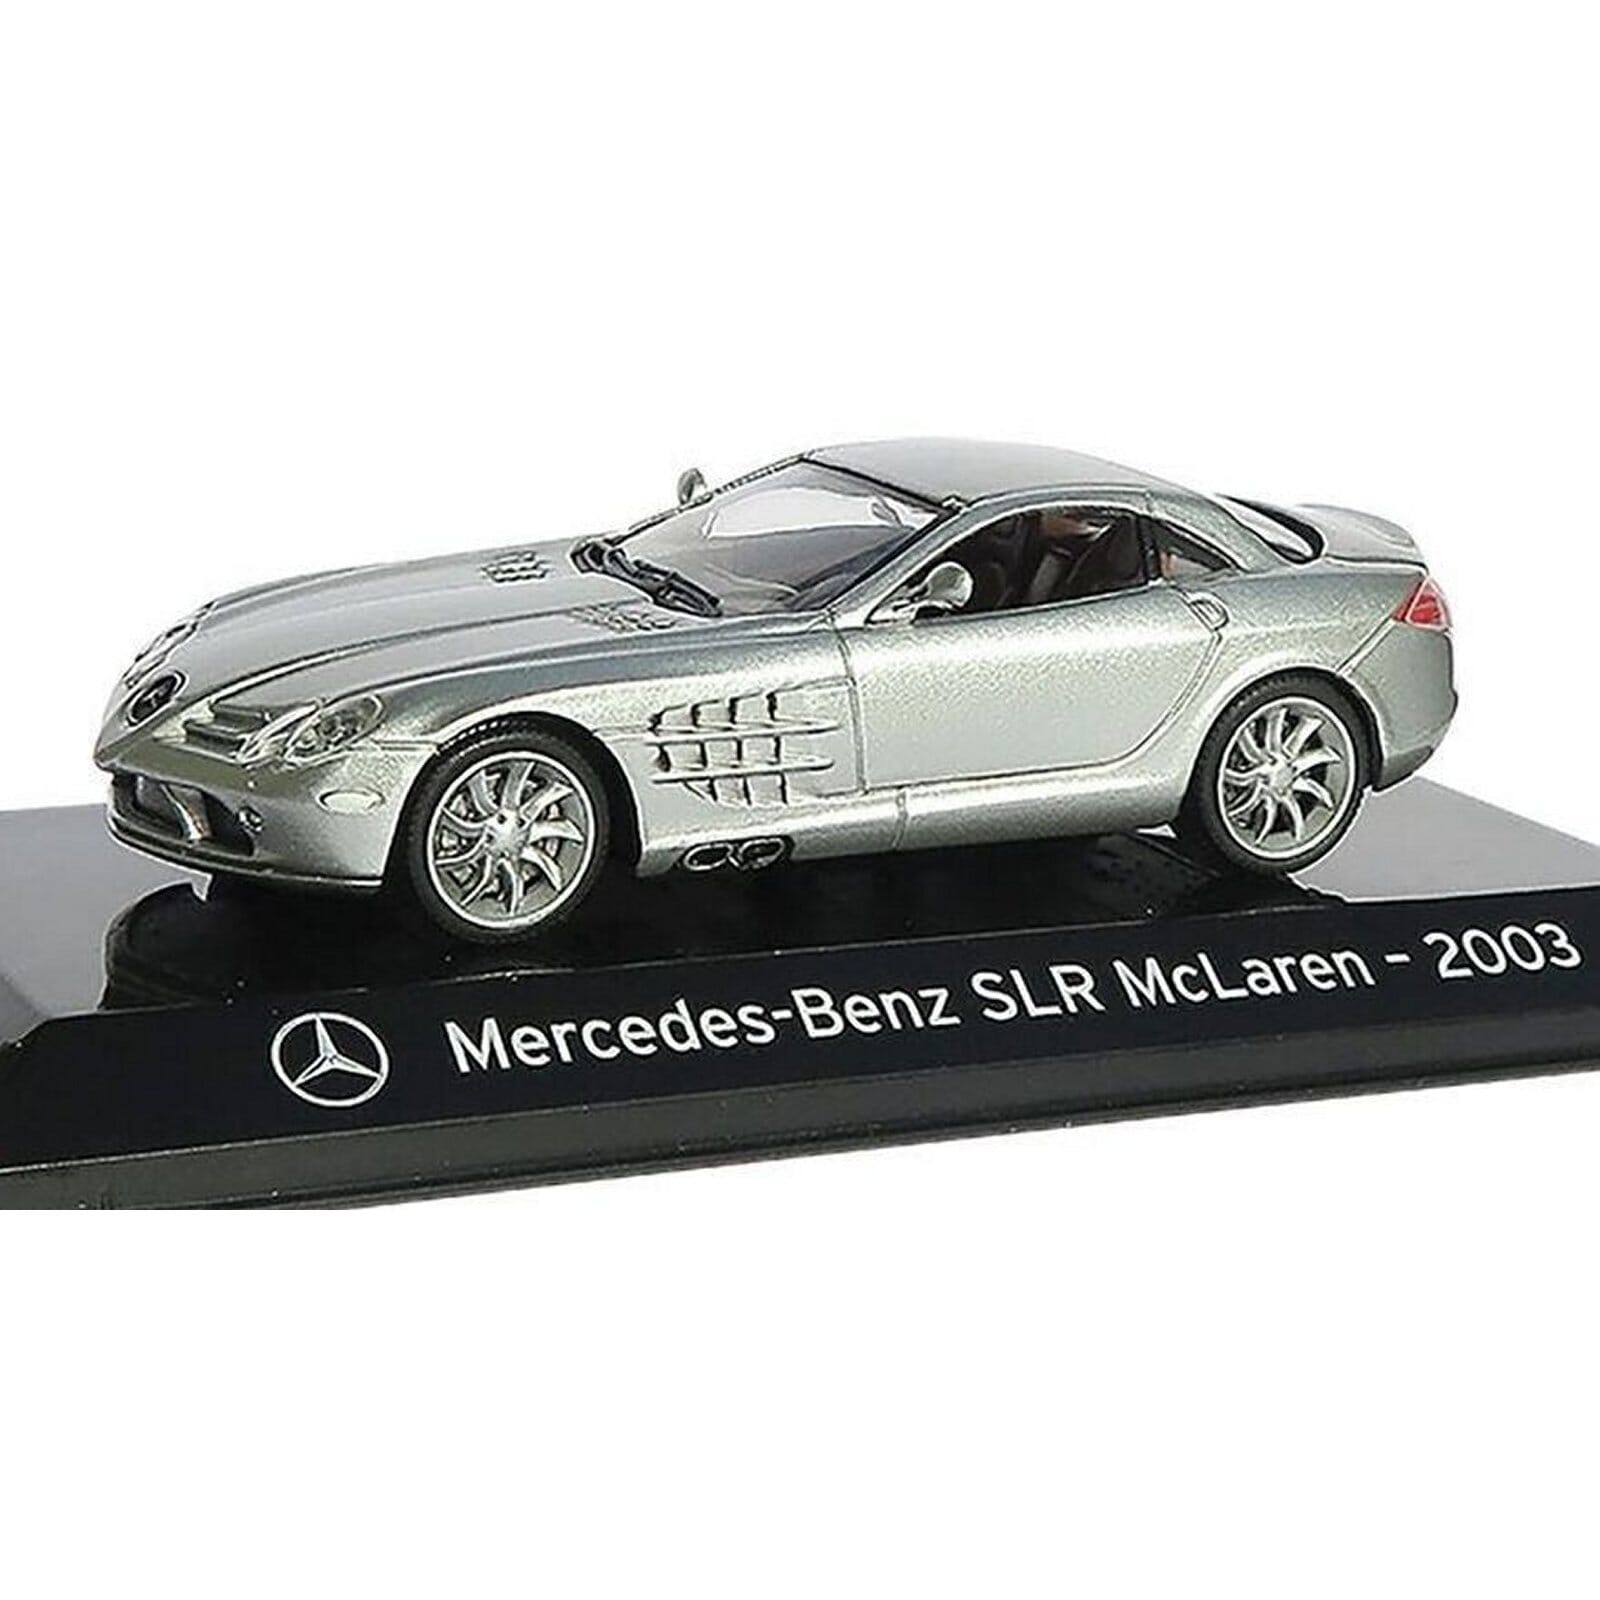 Mercedes Benz SLR McLaren Diecast Model 1:43 scale Silver